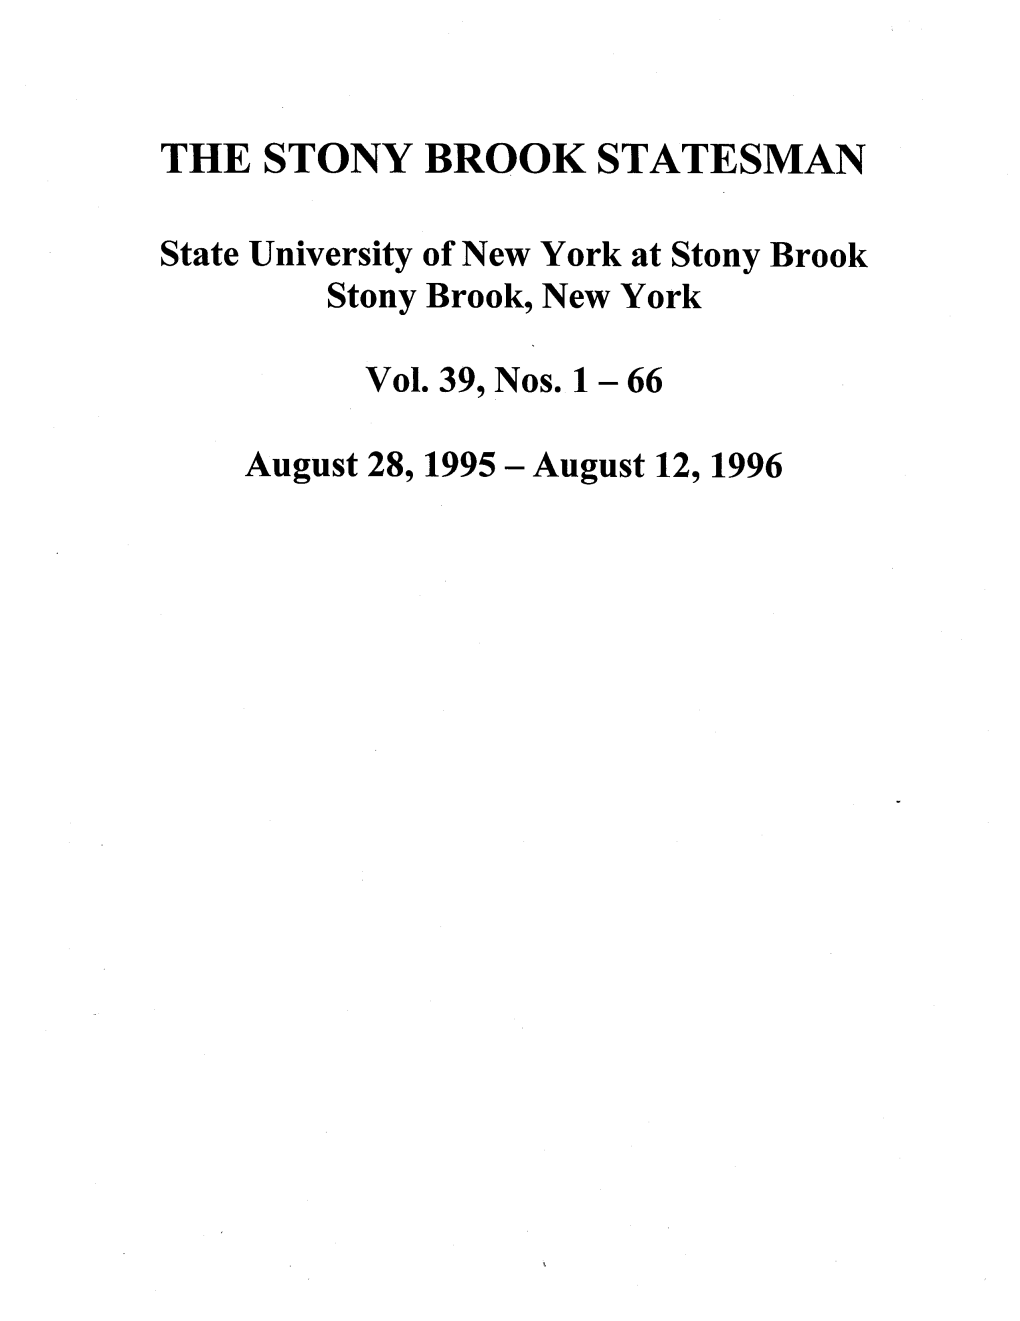 The Stony Brook Statesman